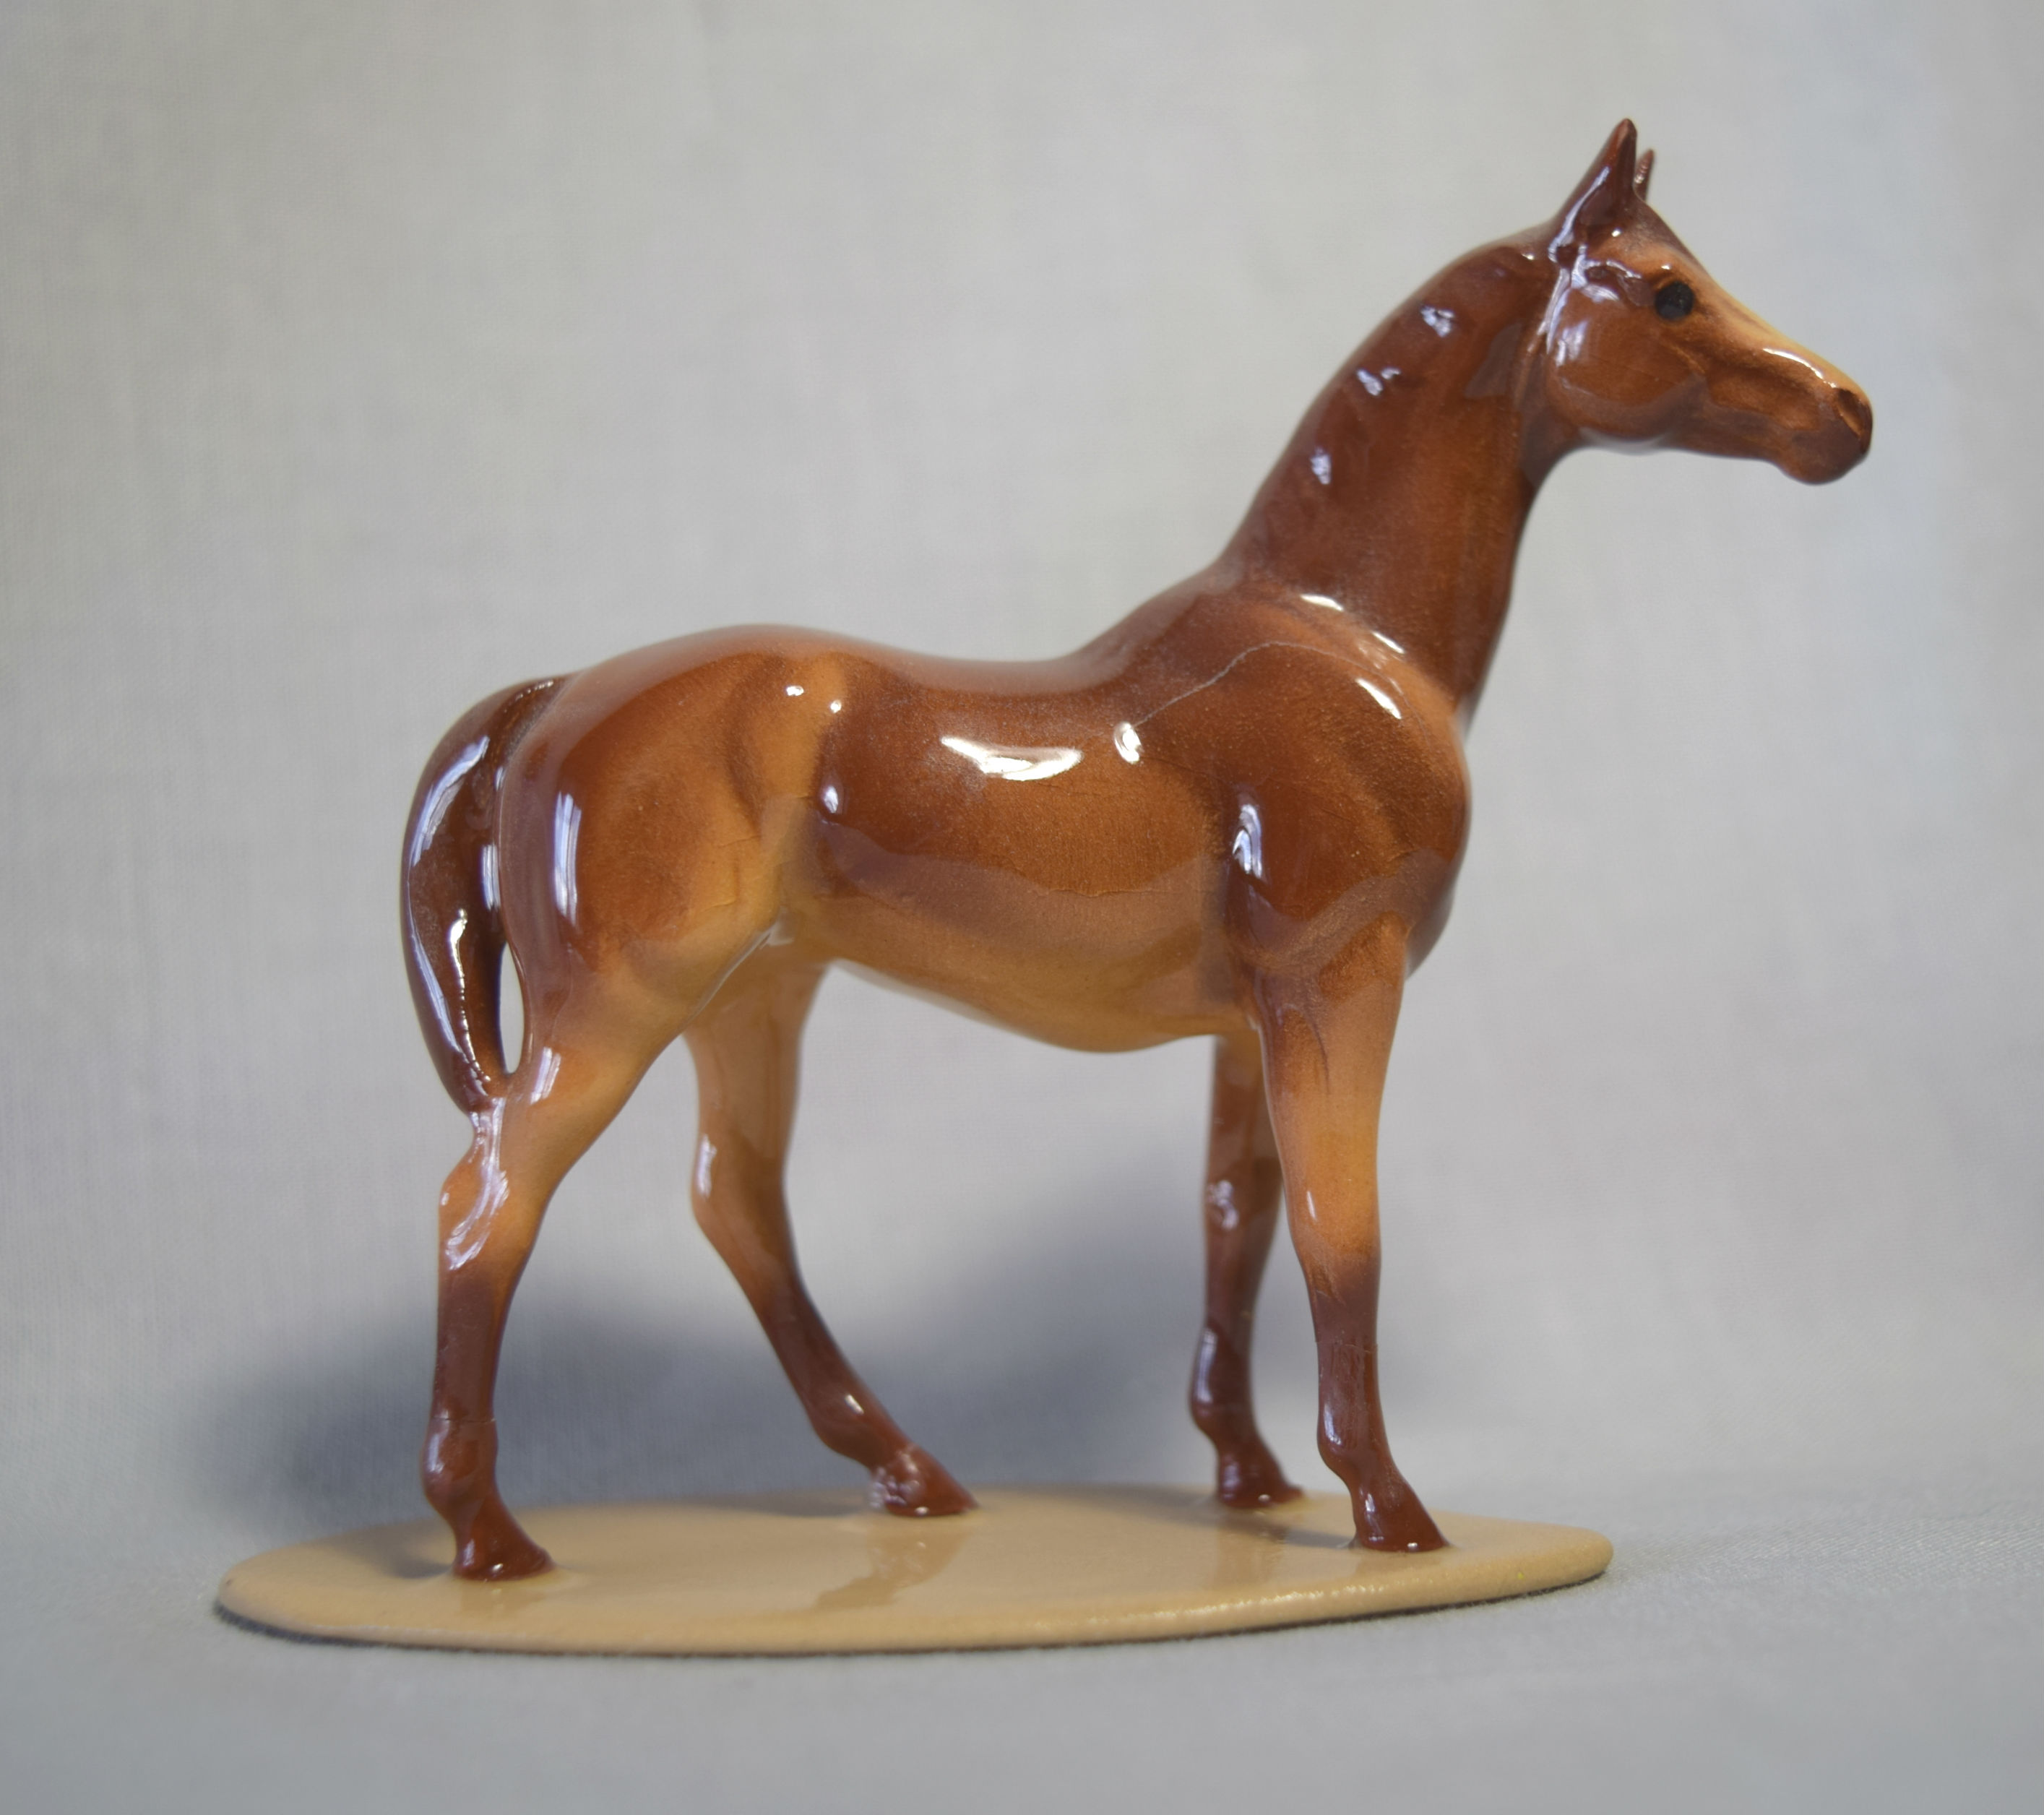 Thoroughbred Racehorse “Swaps” main image